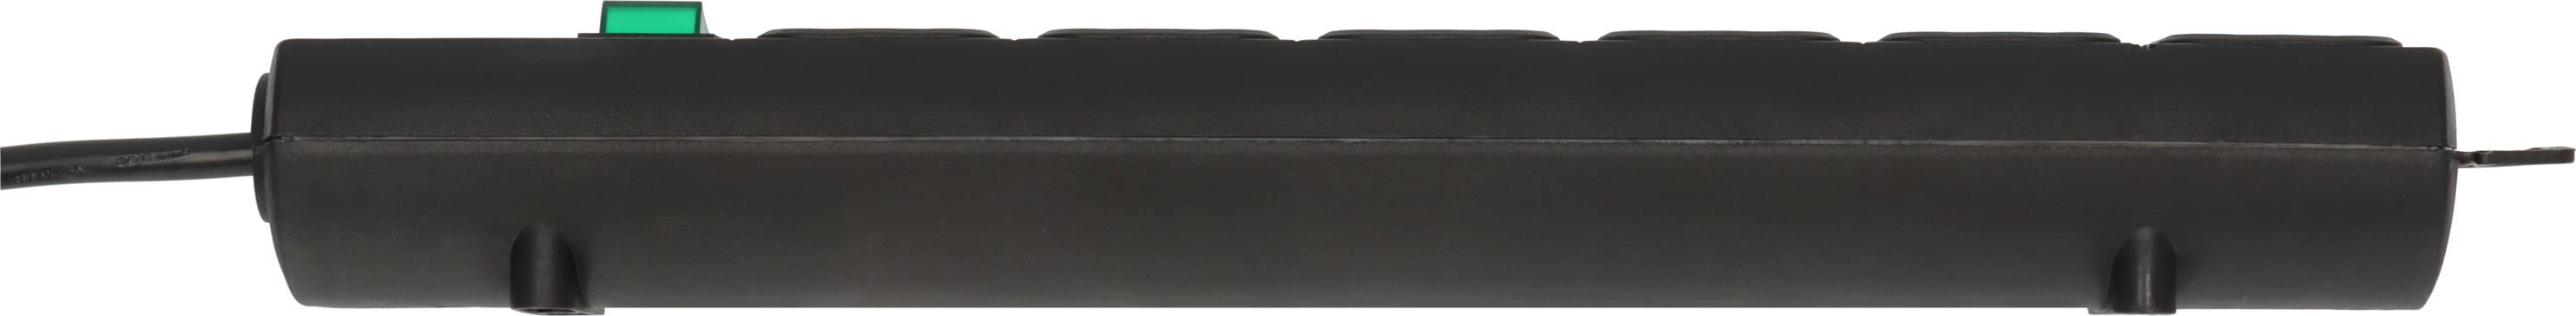 Regleta Comfort-Line Plus con pestañas enchufes 4 blanco 2m H05VV-F 3G1,5